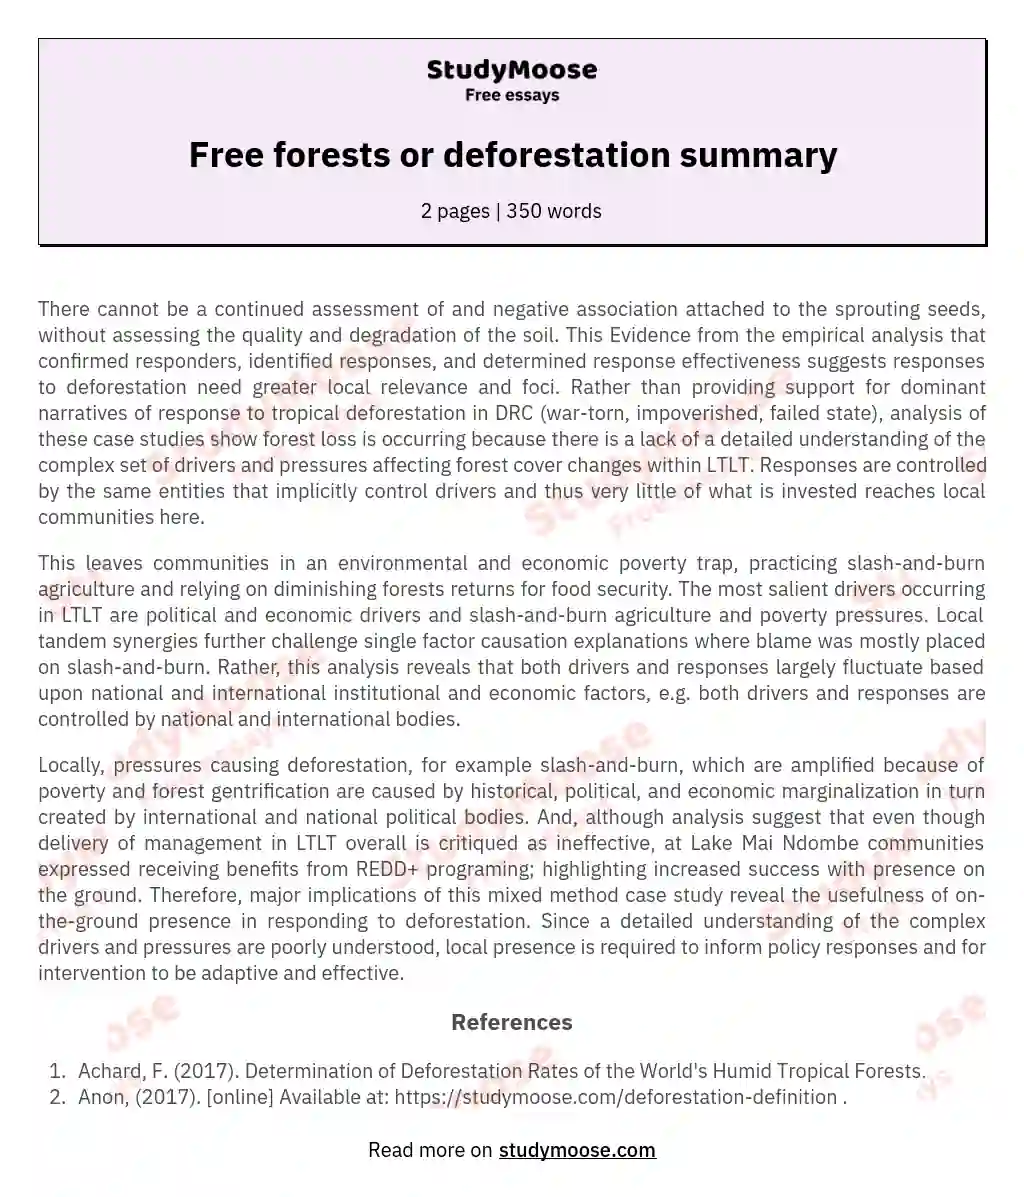 Free forests or deforestation summary essay